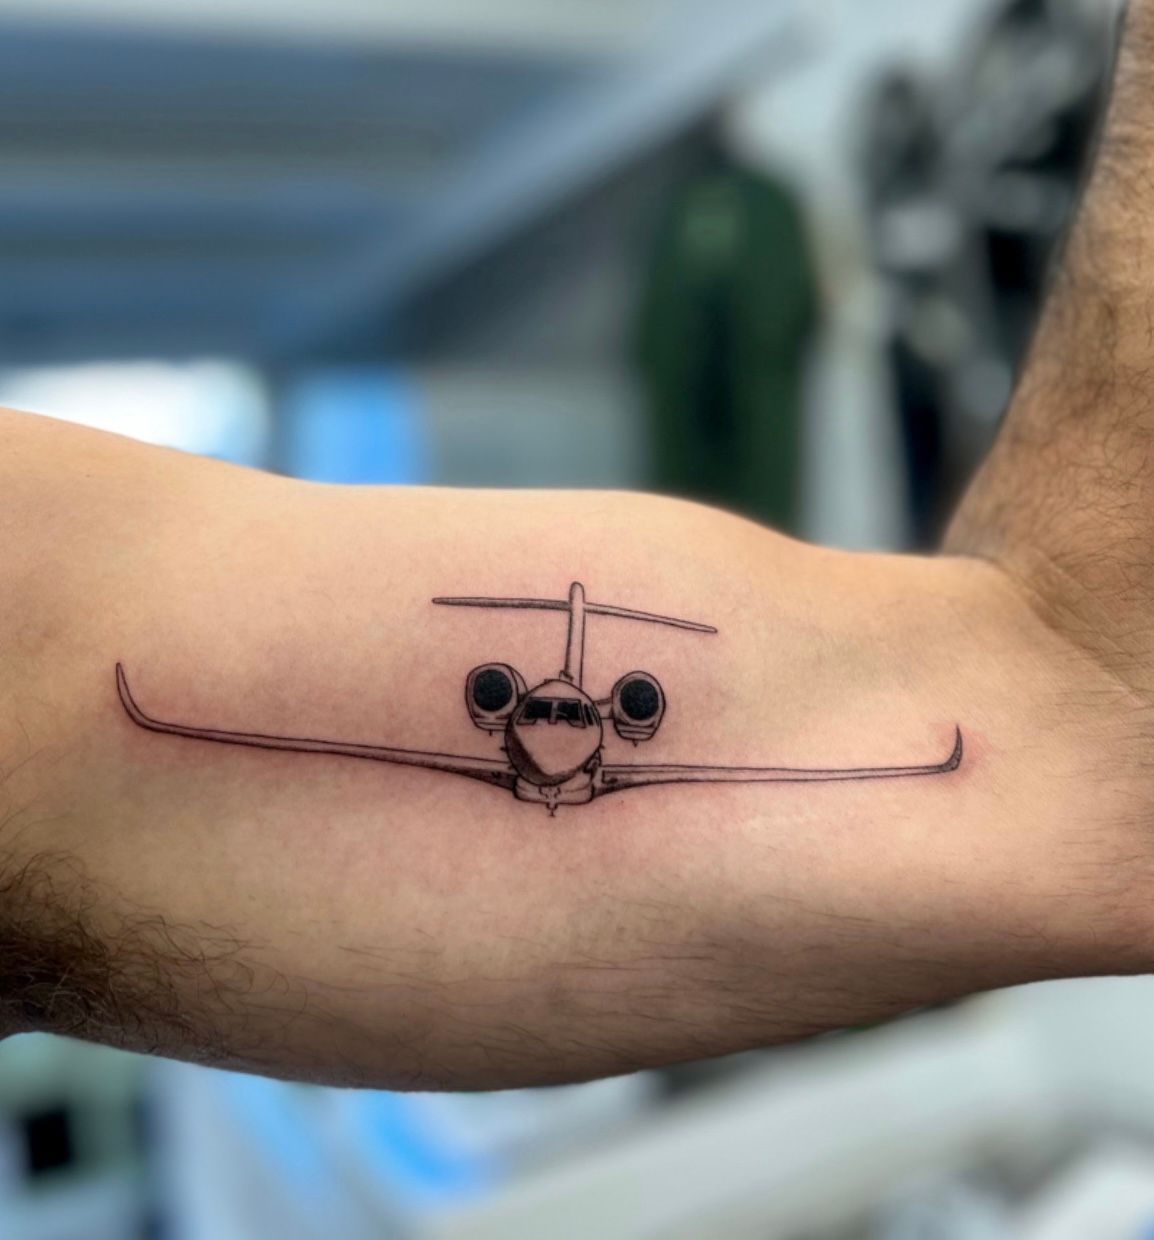 Micro airplane tattoo on the arm - Tattoogrid.net